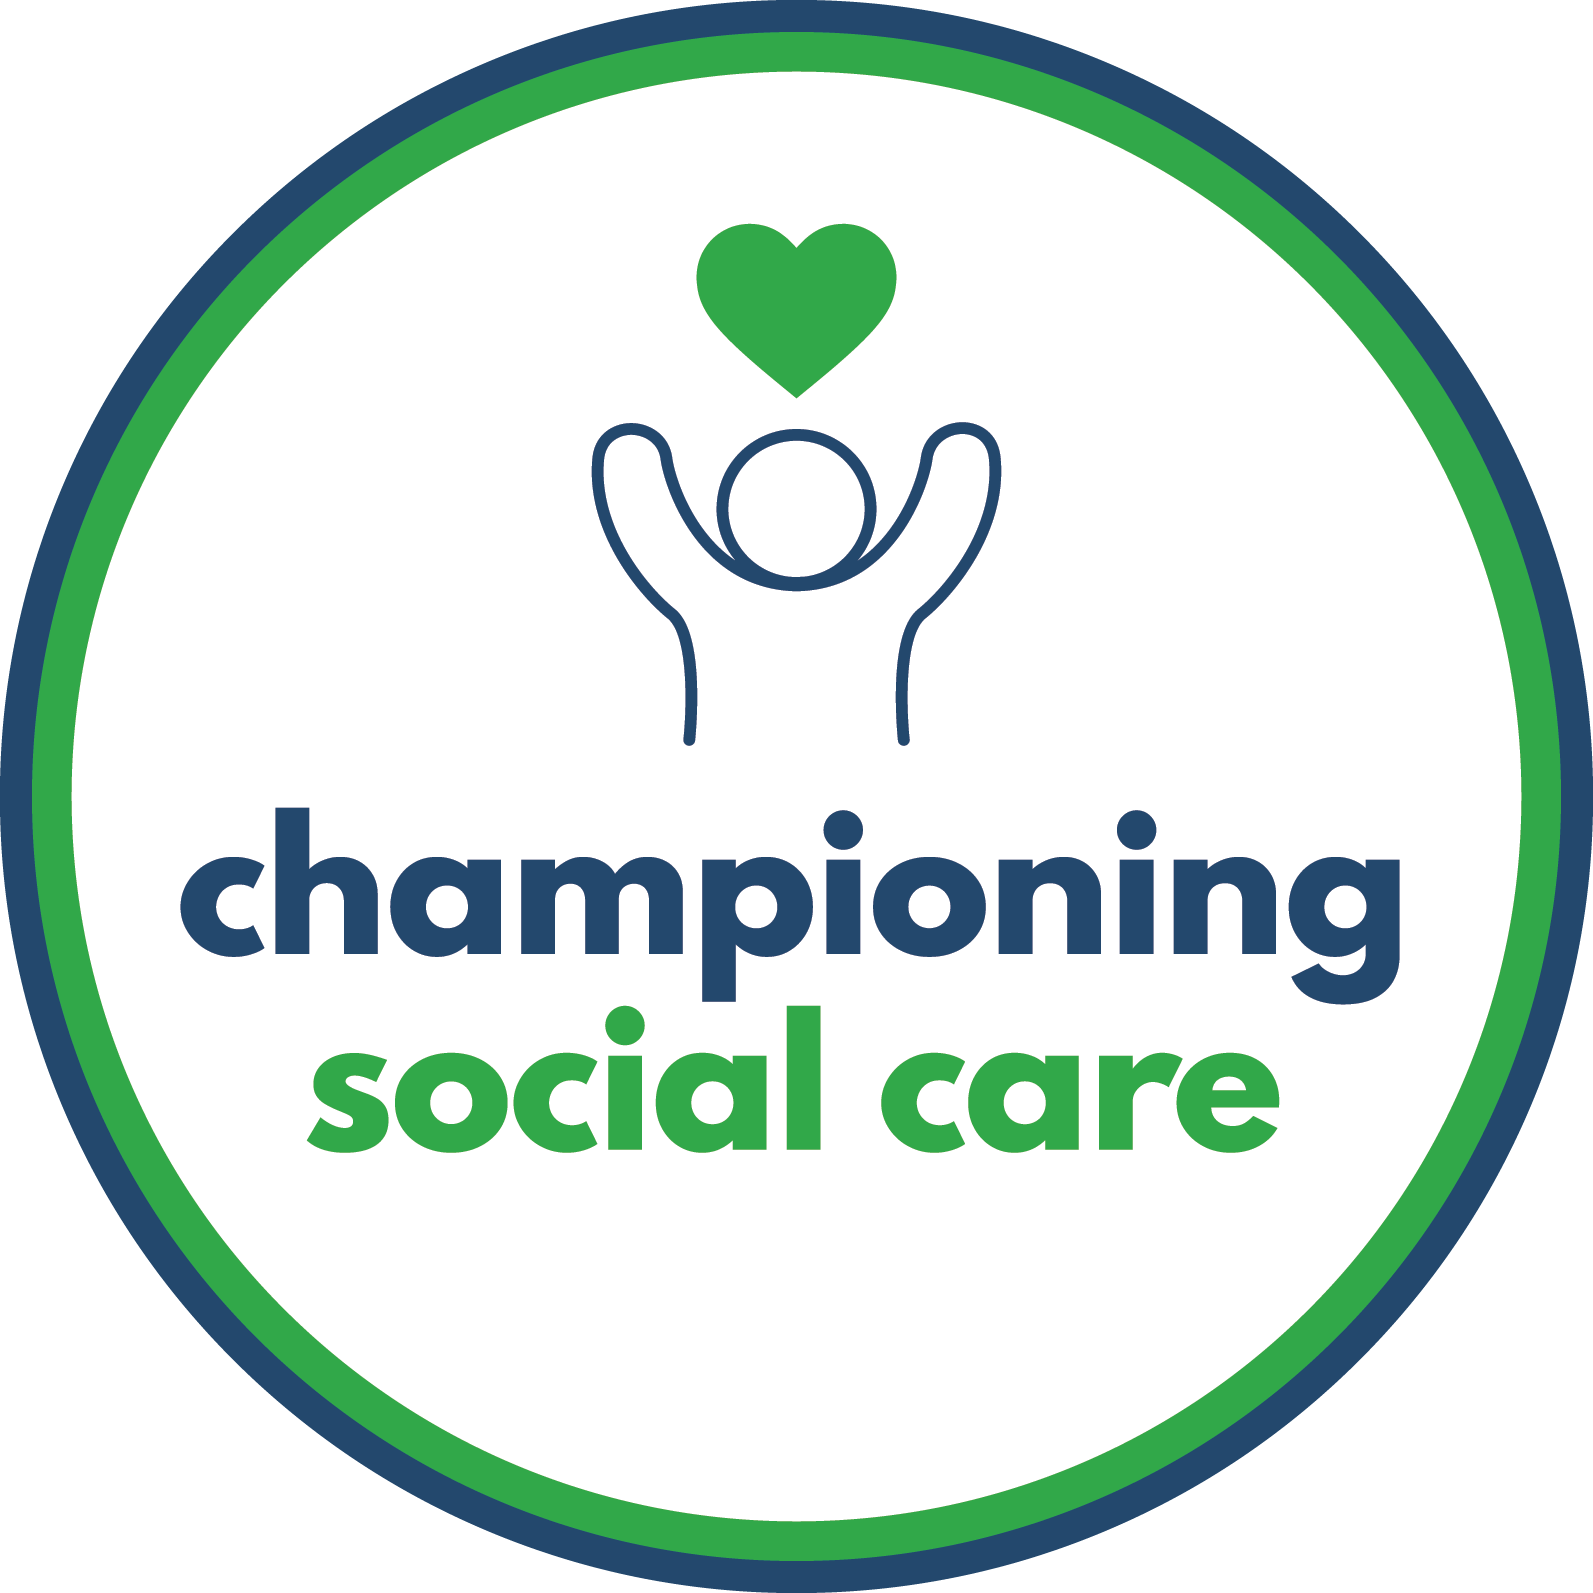 Championing Social Care logo with small pencil drawing man below green heart